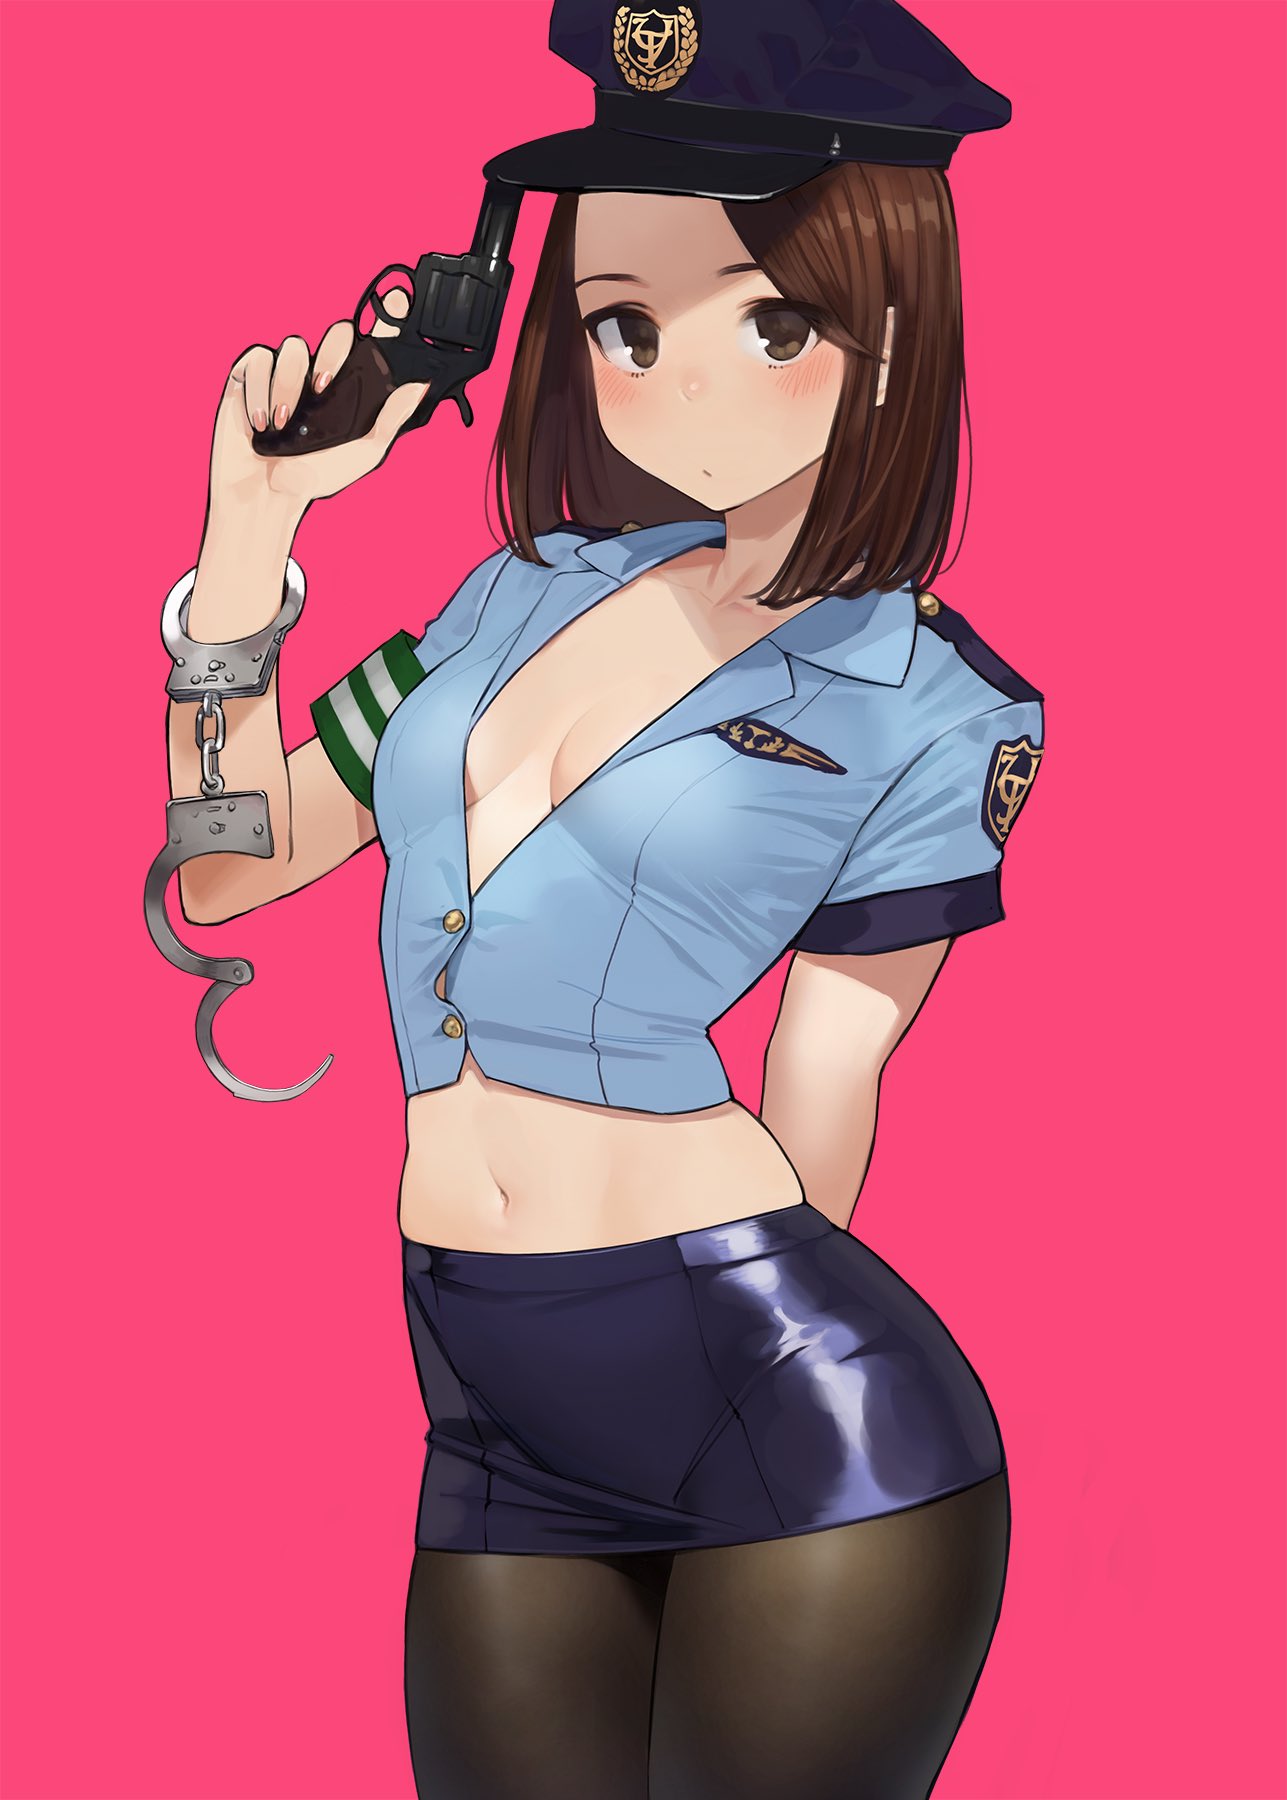 Anime 1287x1800 anime anime girls police pistol brunette Miru Tights yomu small boobs